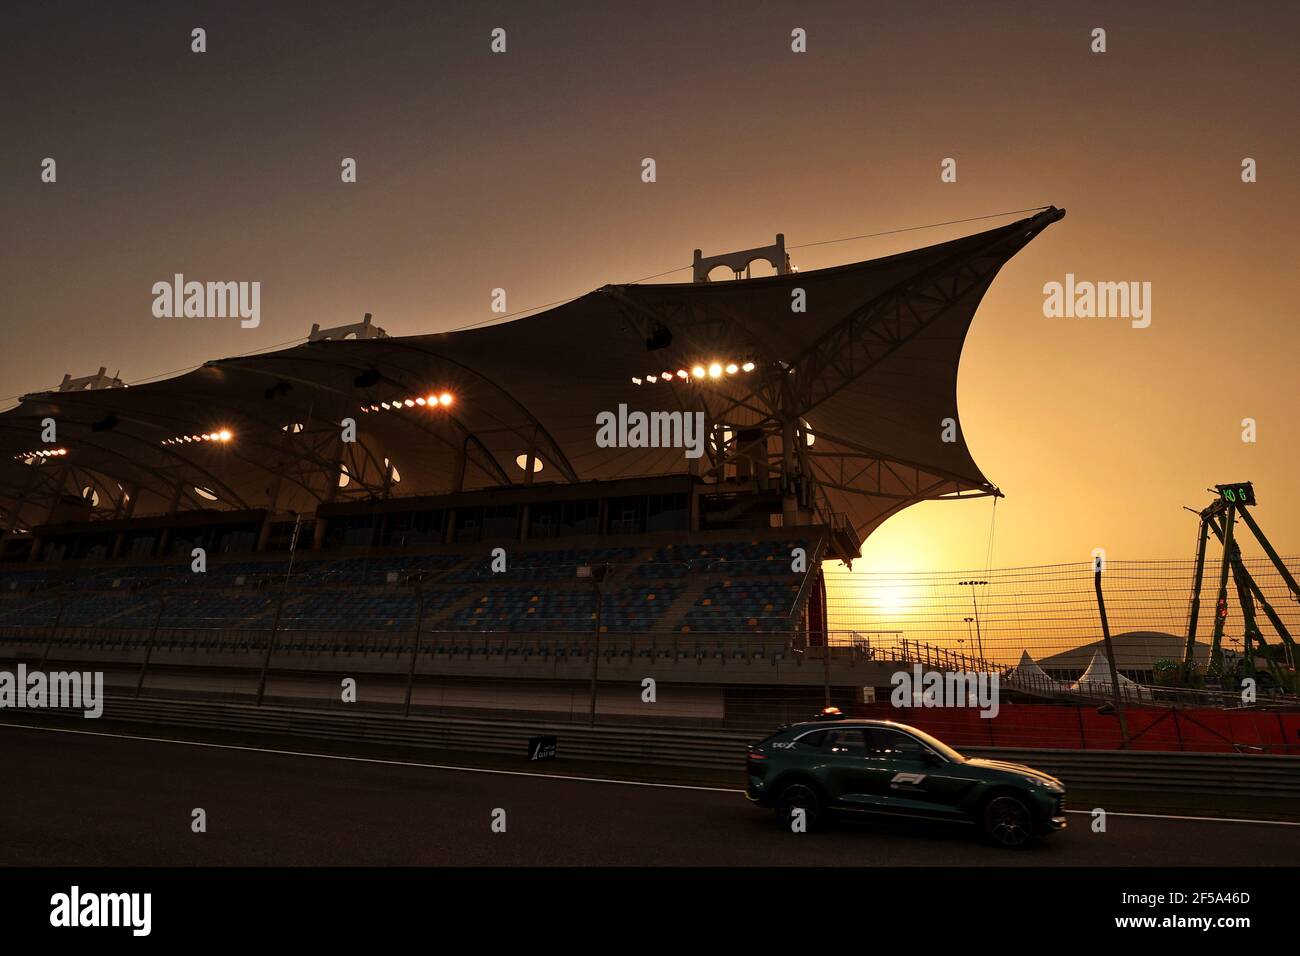 Sakhir, Bahréin. 25th de mayo de 2021.el coche médico Aston Martin FIA. Gran Premio de Bahrein, jueves 25th de marzo de 2021. Sakhir, Bahréin. Crédito: James Moy/Alamy Live News Foto de stock